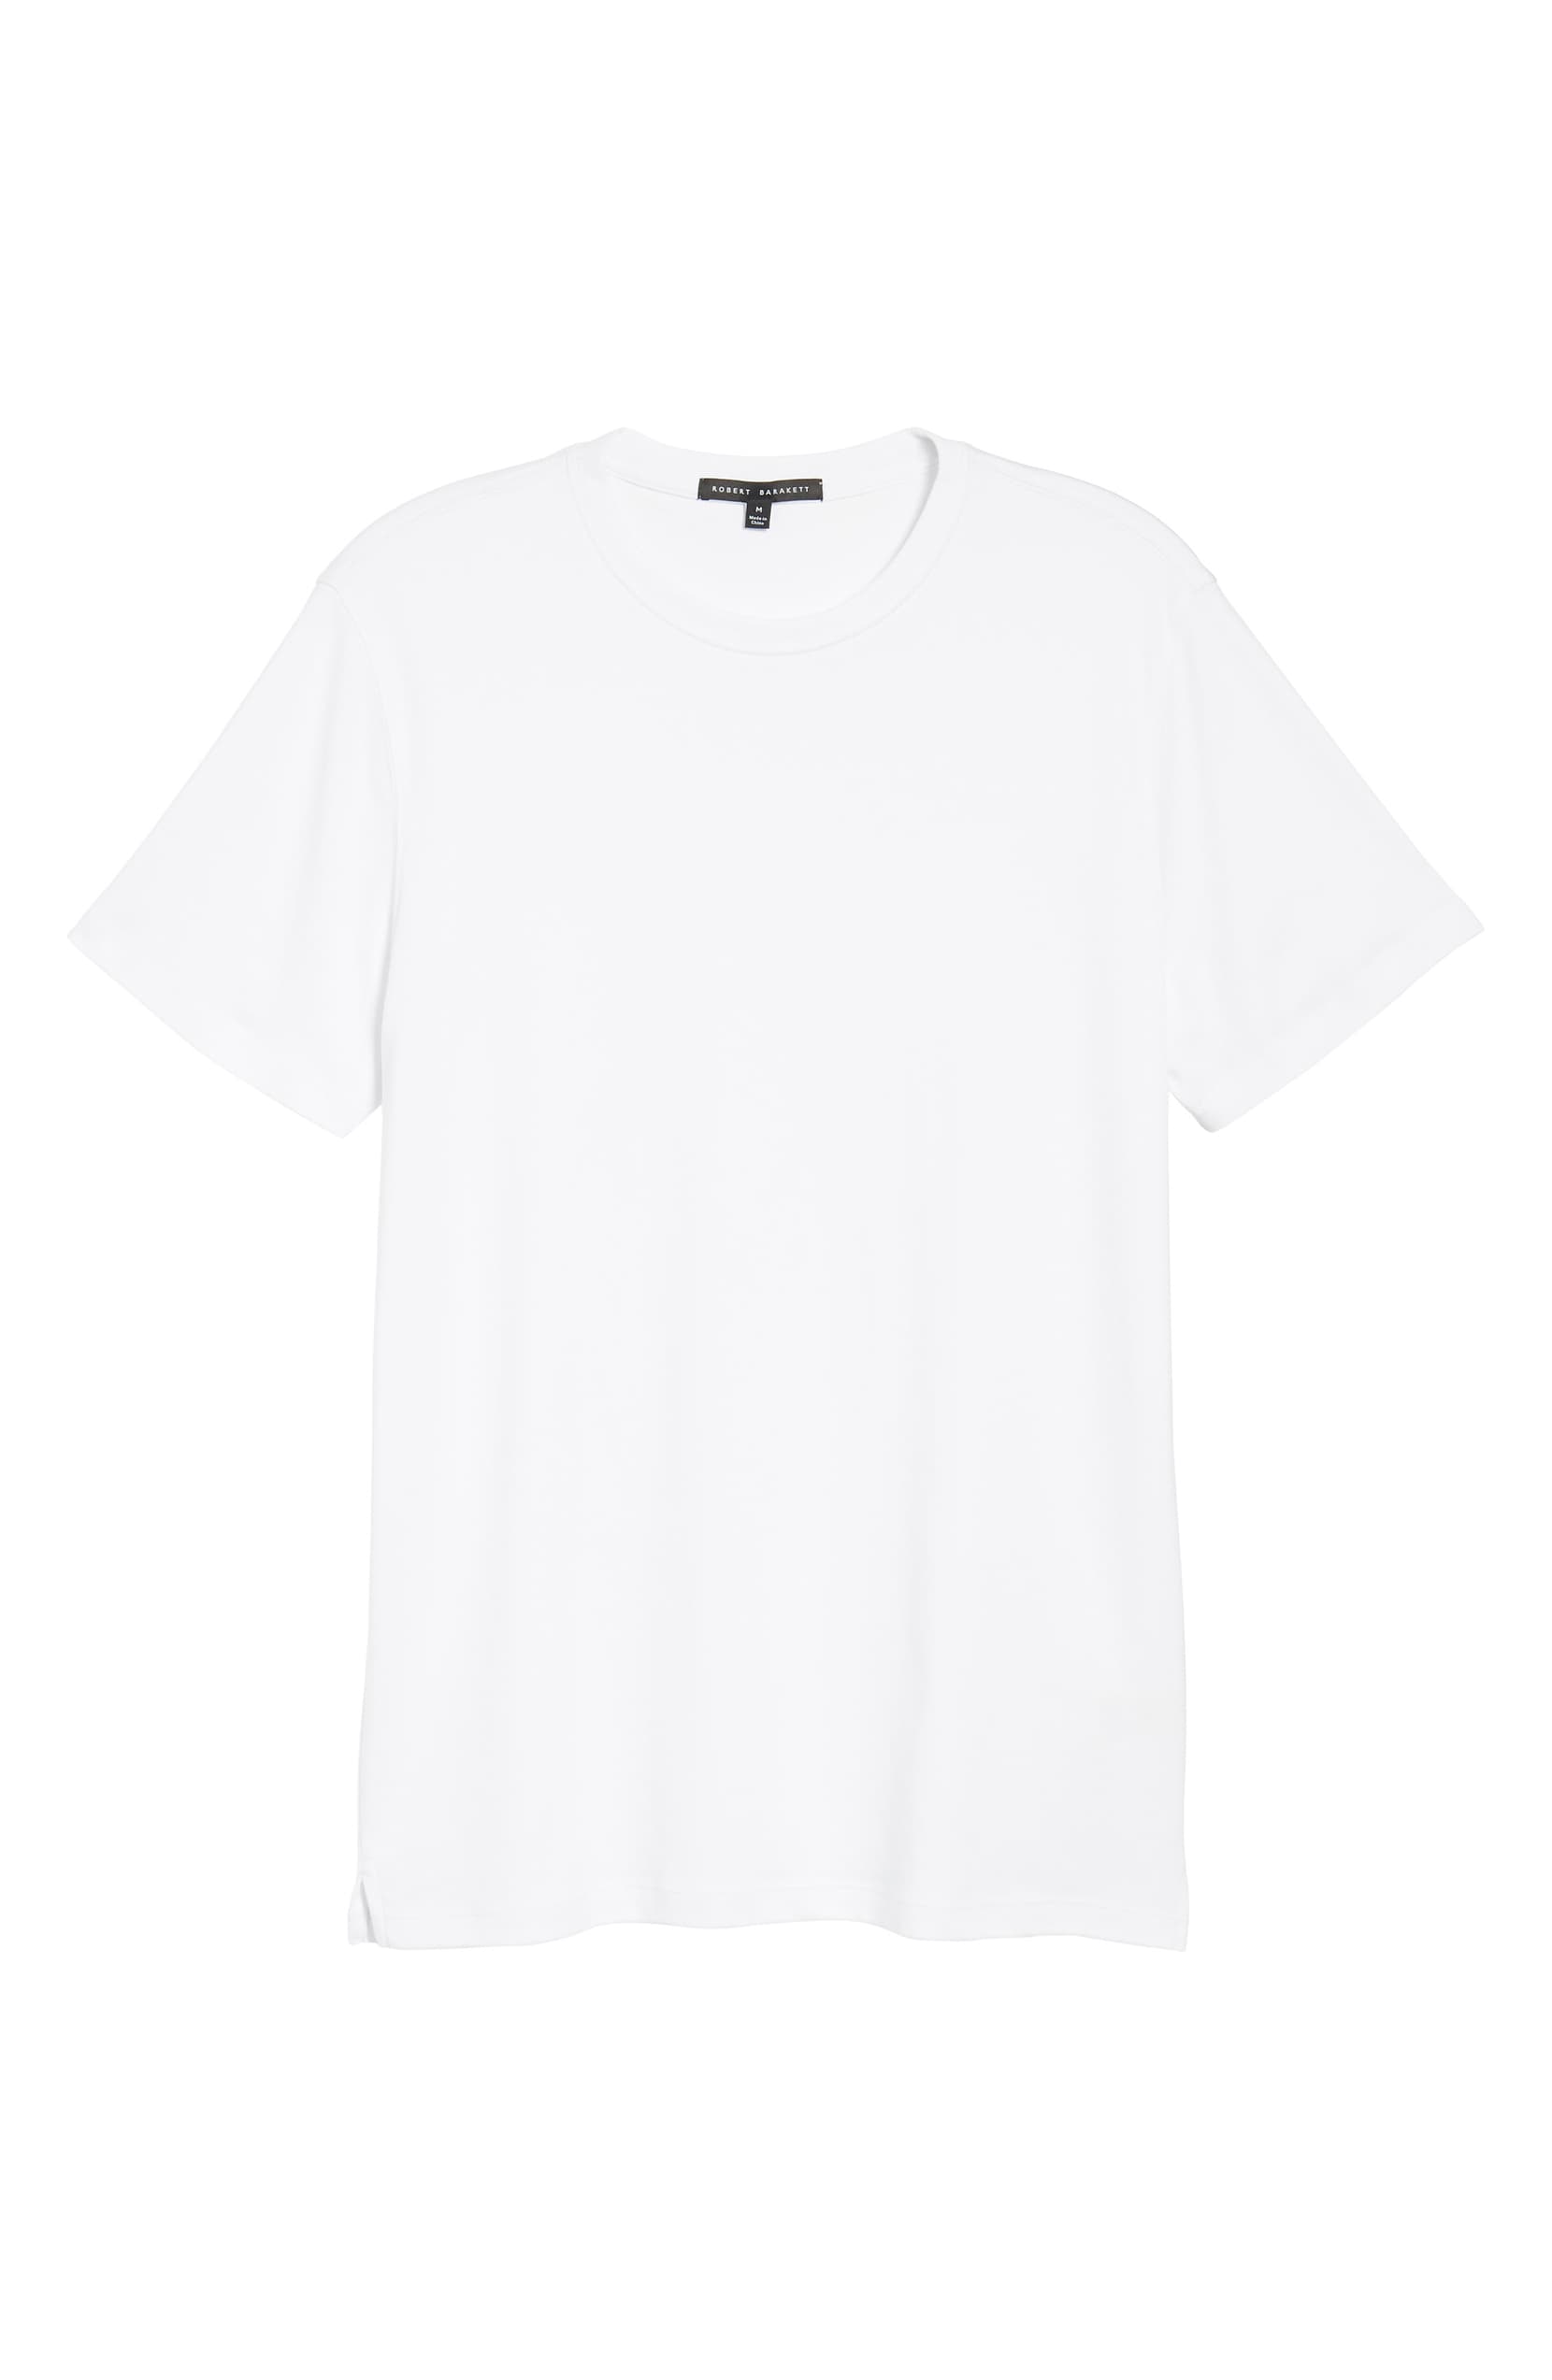 Barakett Crew Neck T-Shirt- White